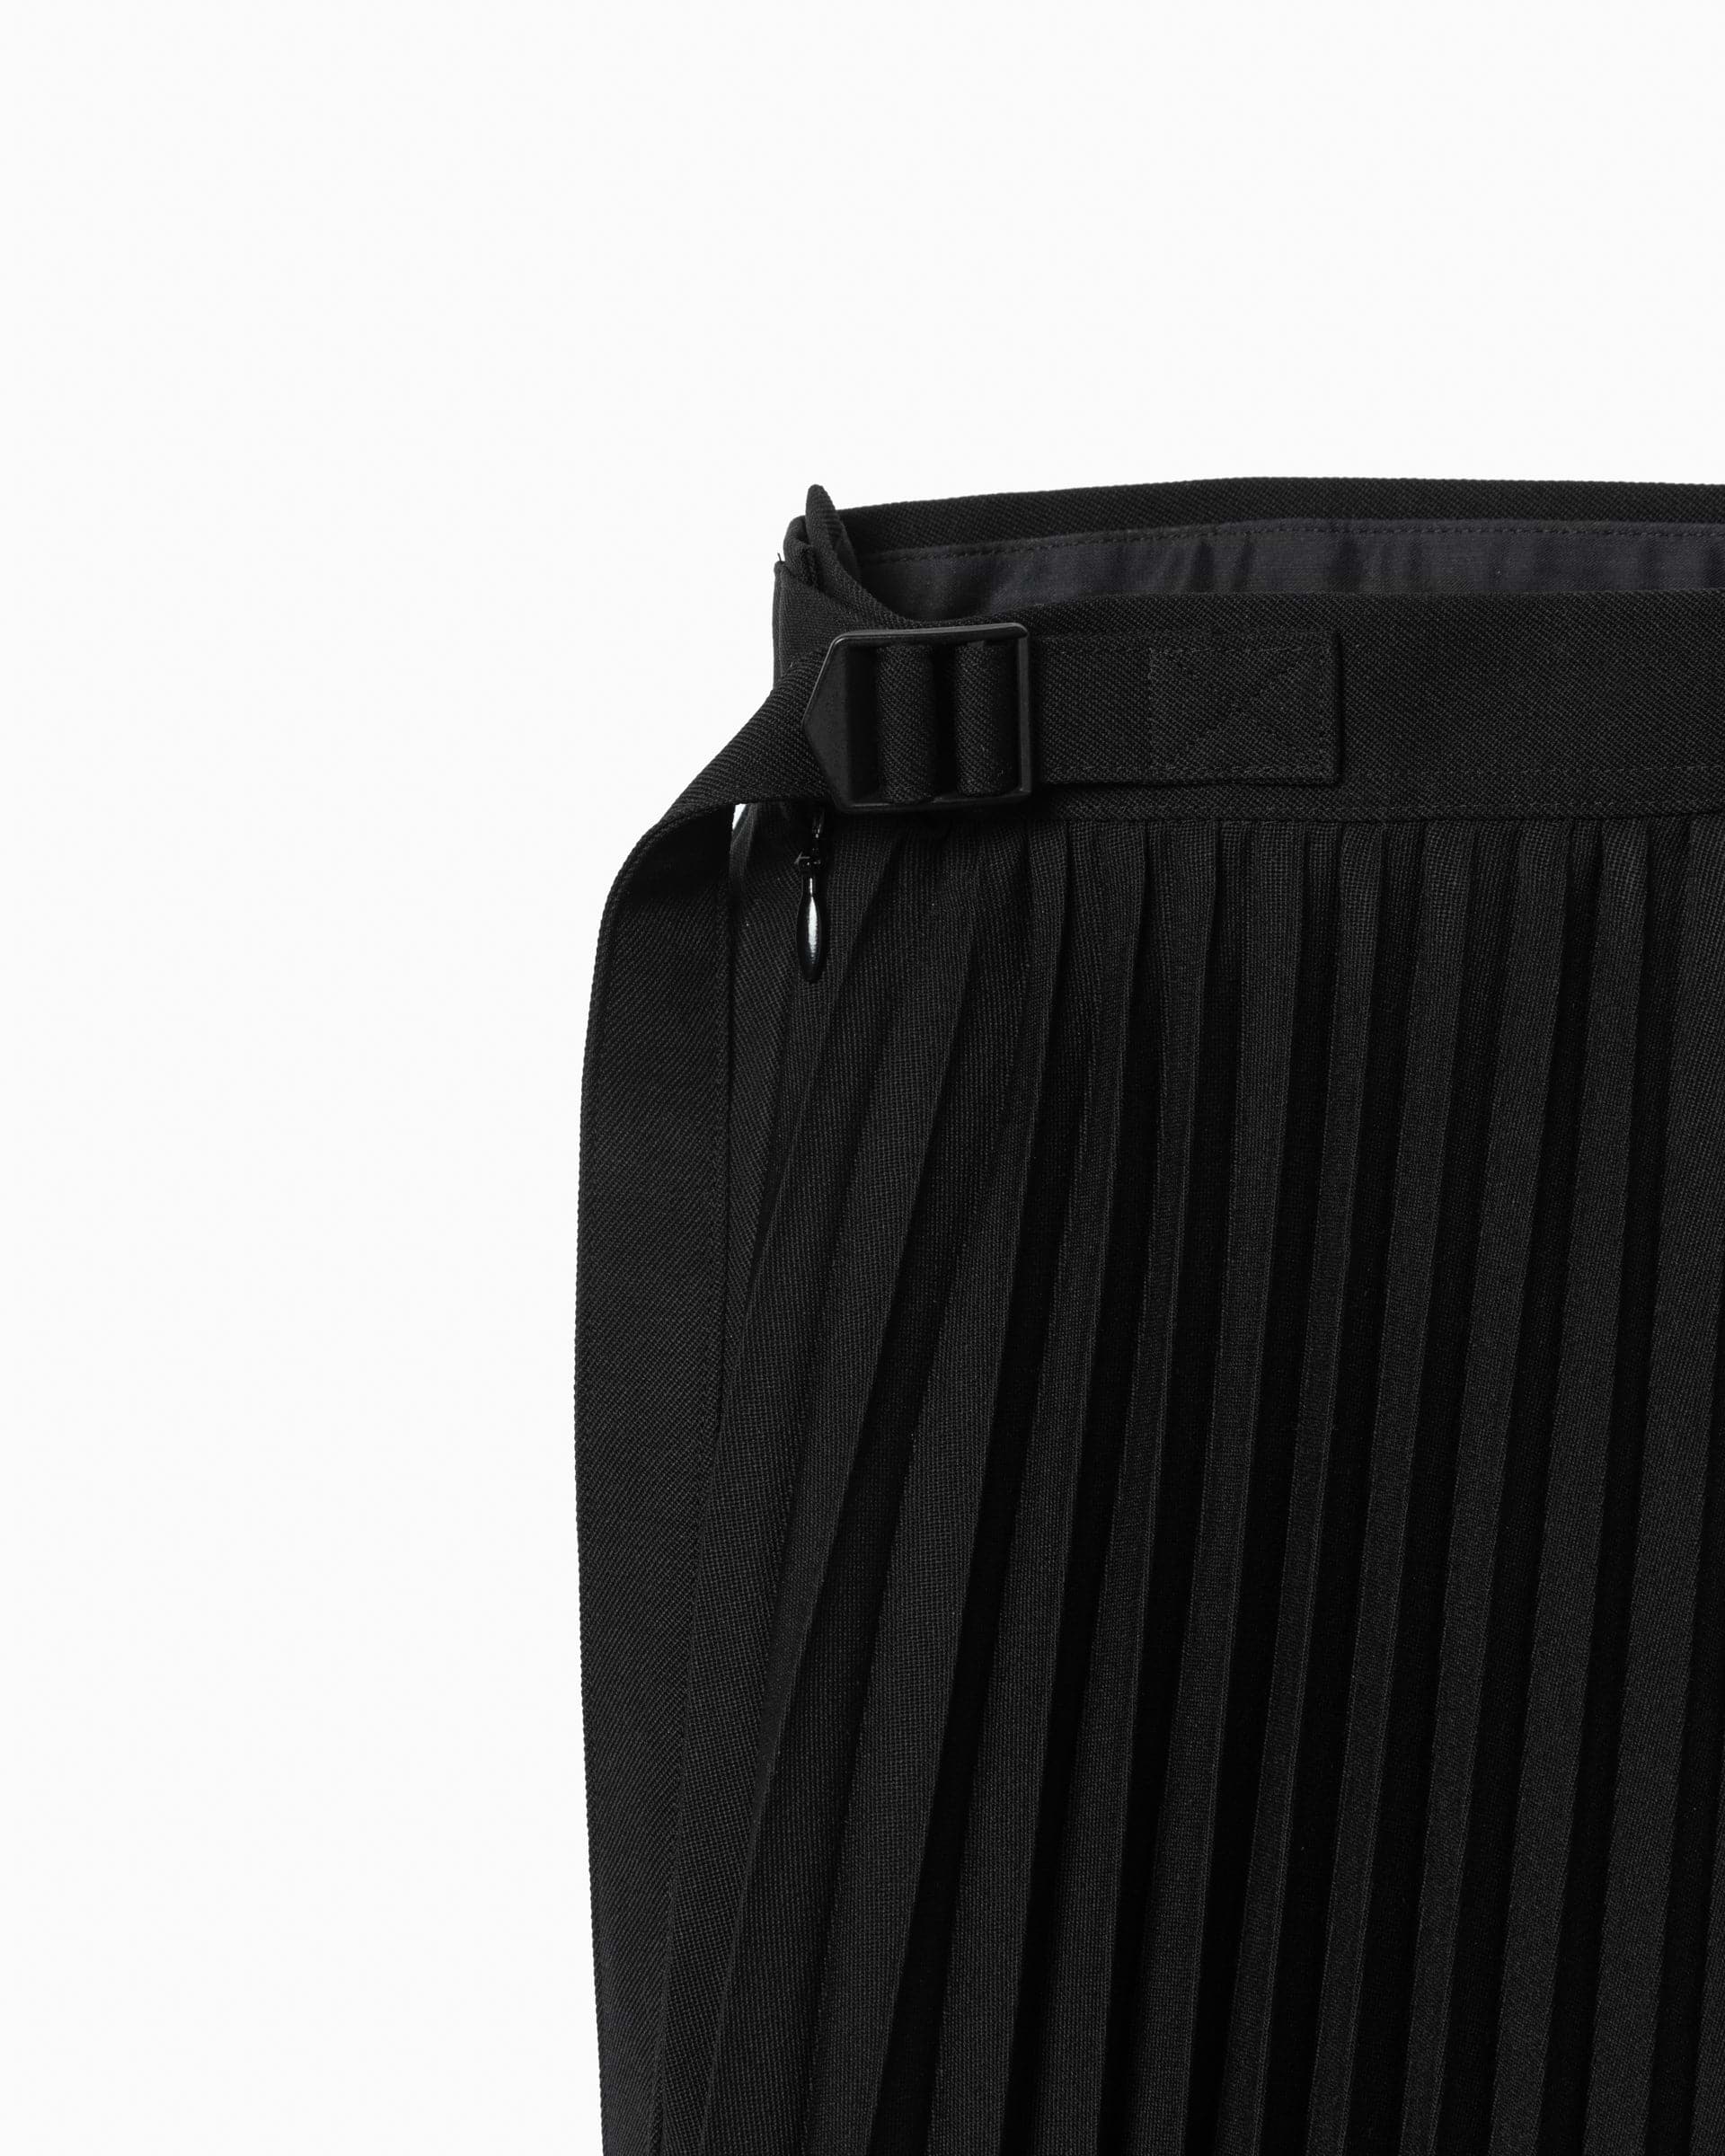 TARO HORIUCHI】カットアウトプリーツスカート – ファッションスナップ 